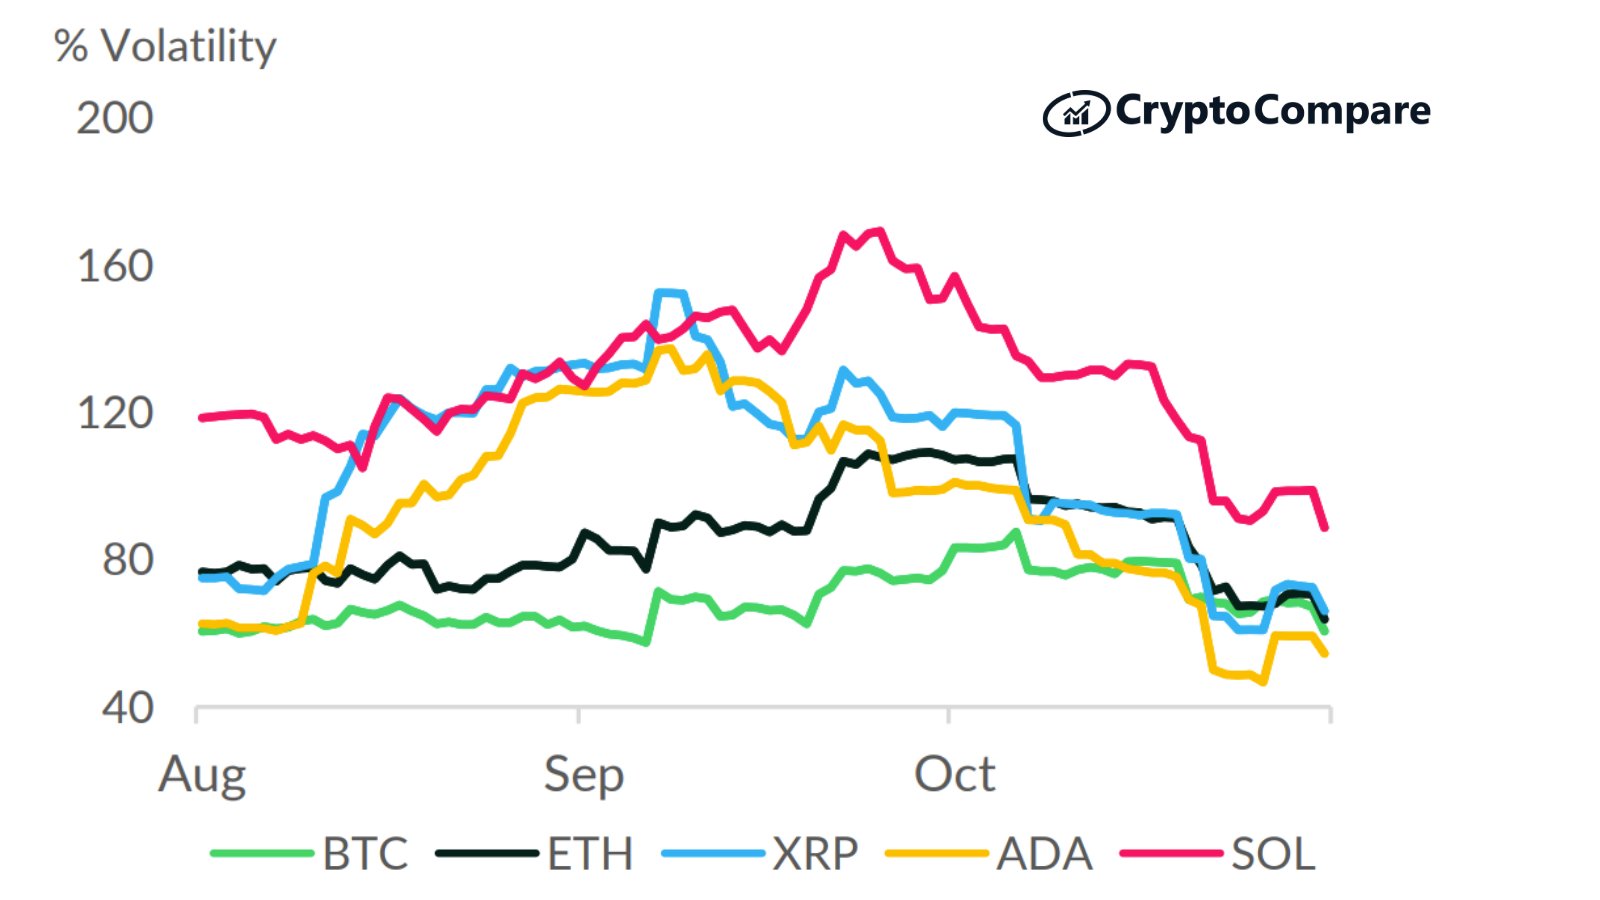 Volatility of Top 5 cryptocurrencies in October 2021